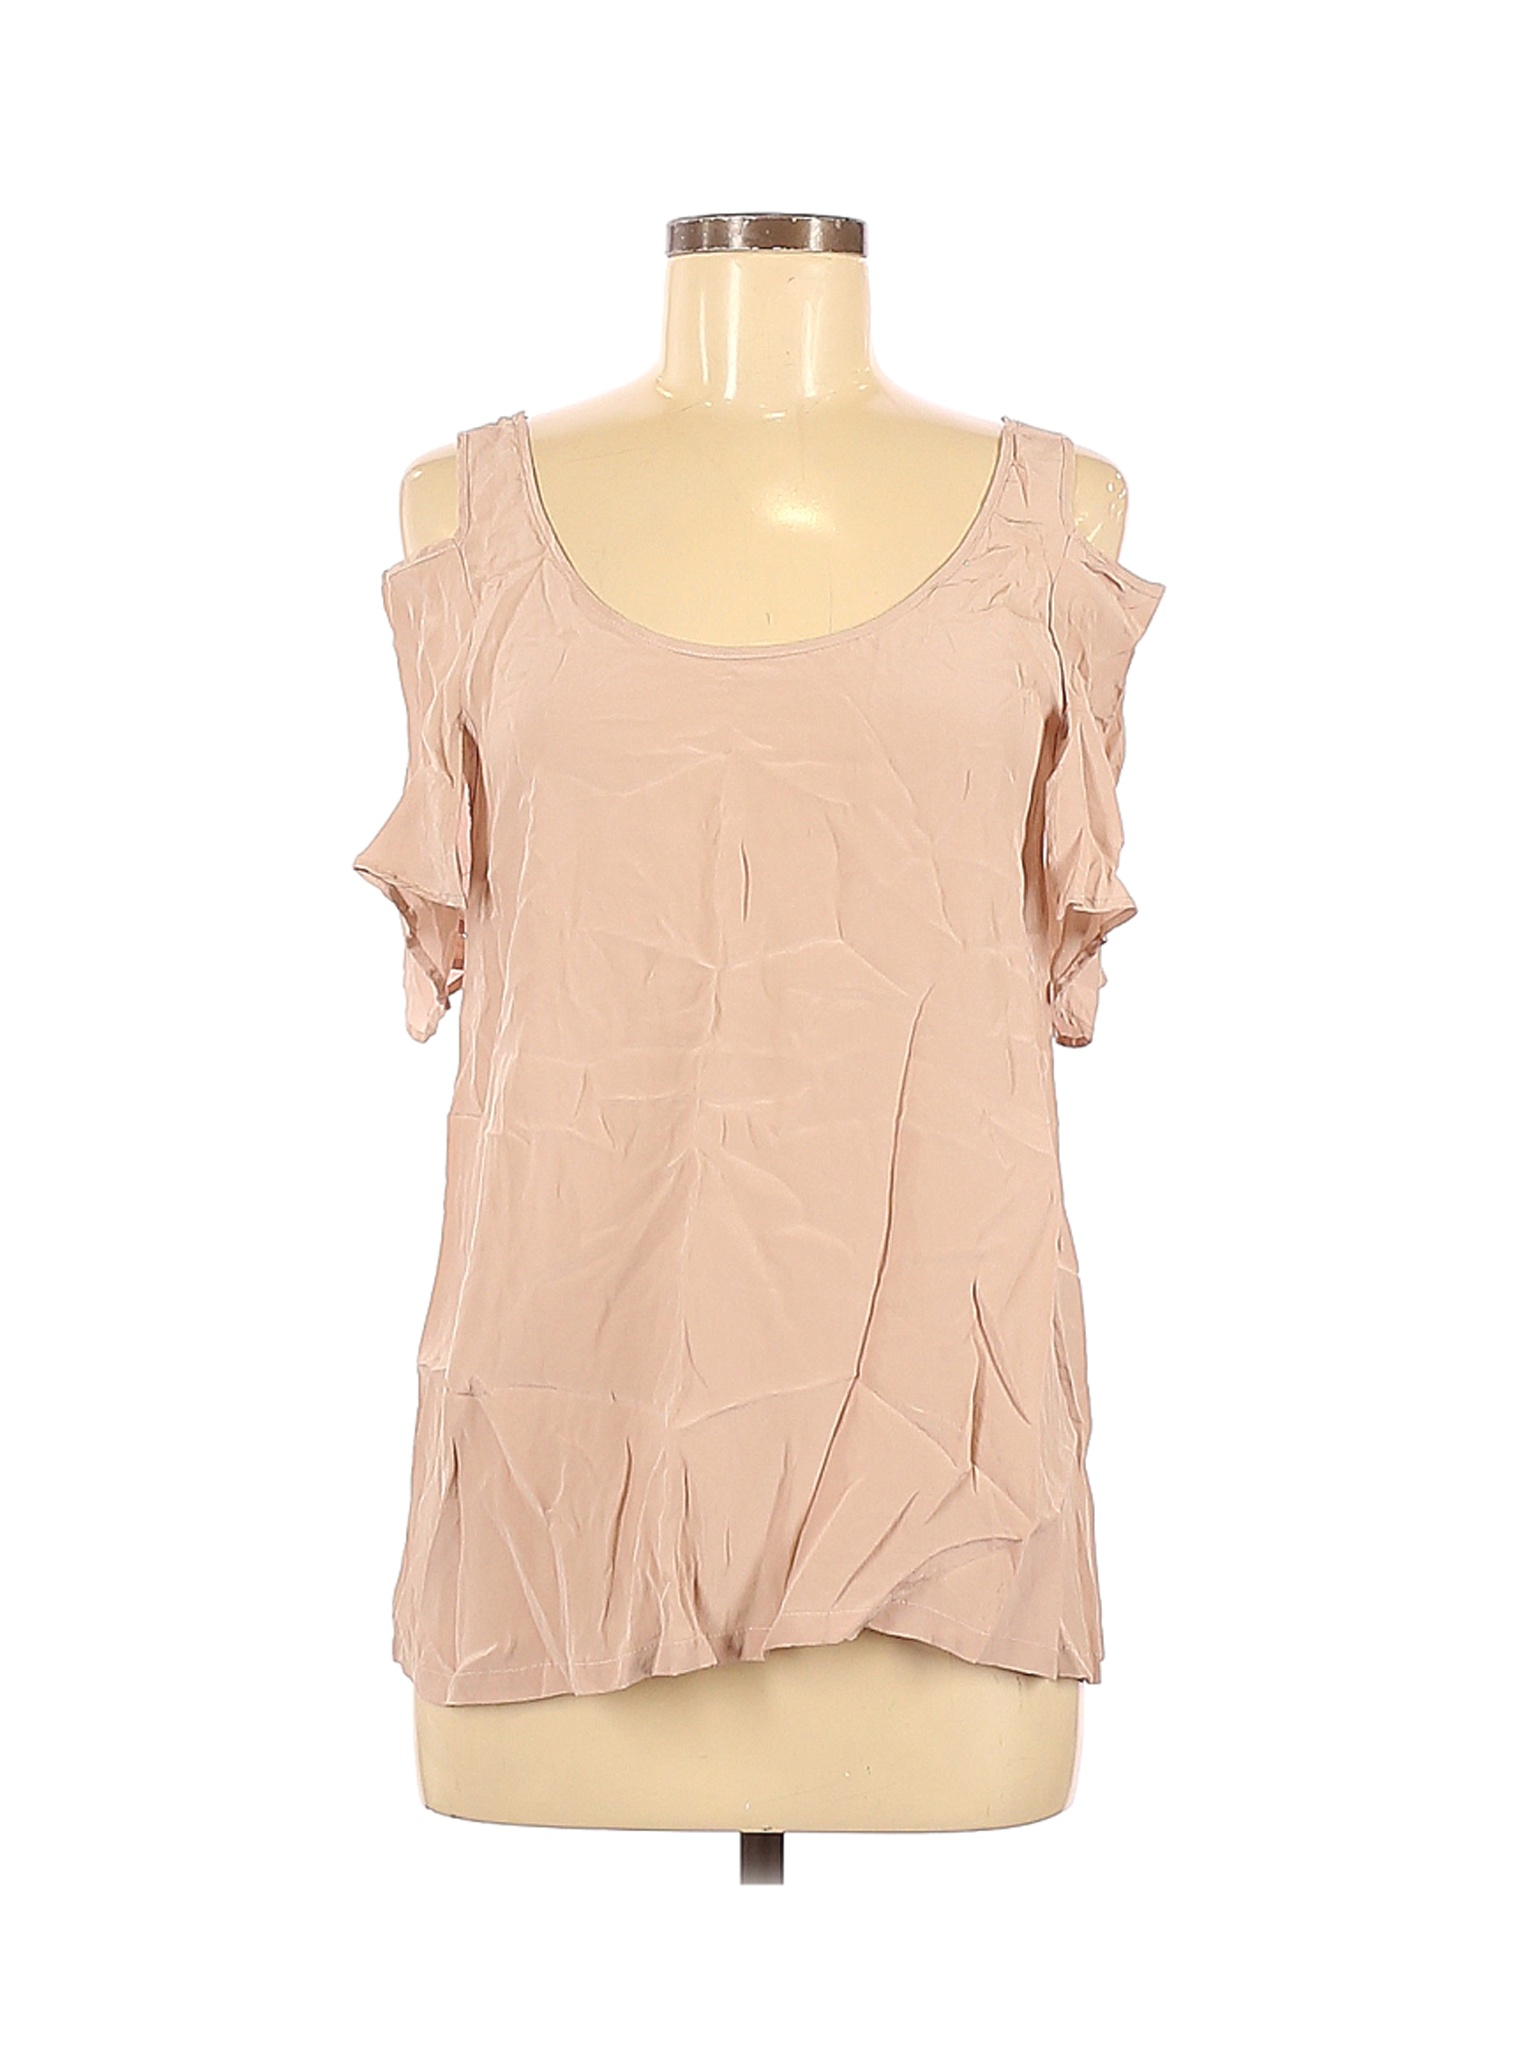 Claudie Pierlot Women Brown Short Sleeve Silk Top 6 | eBay